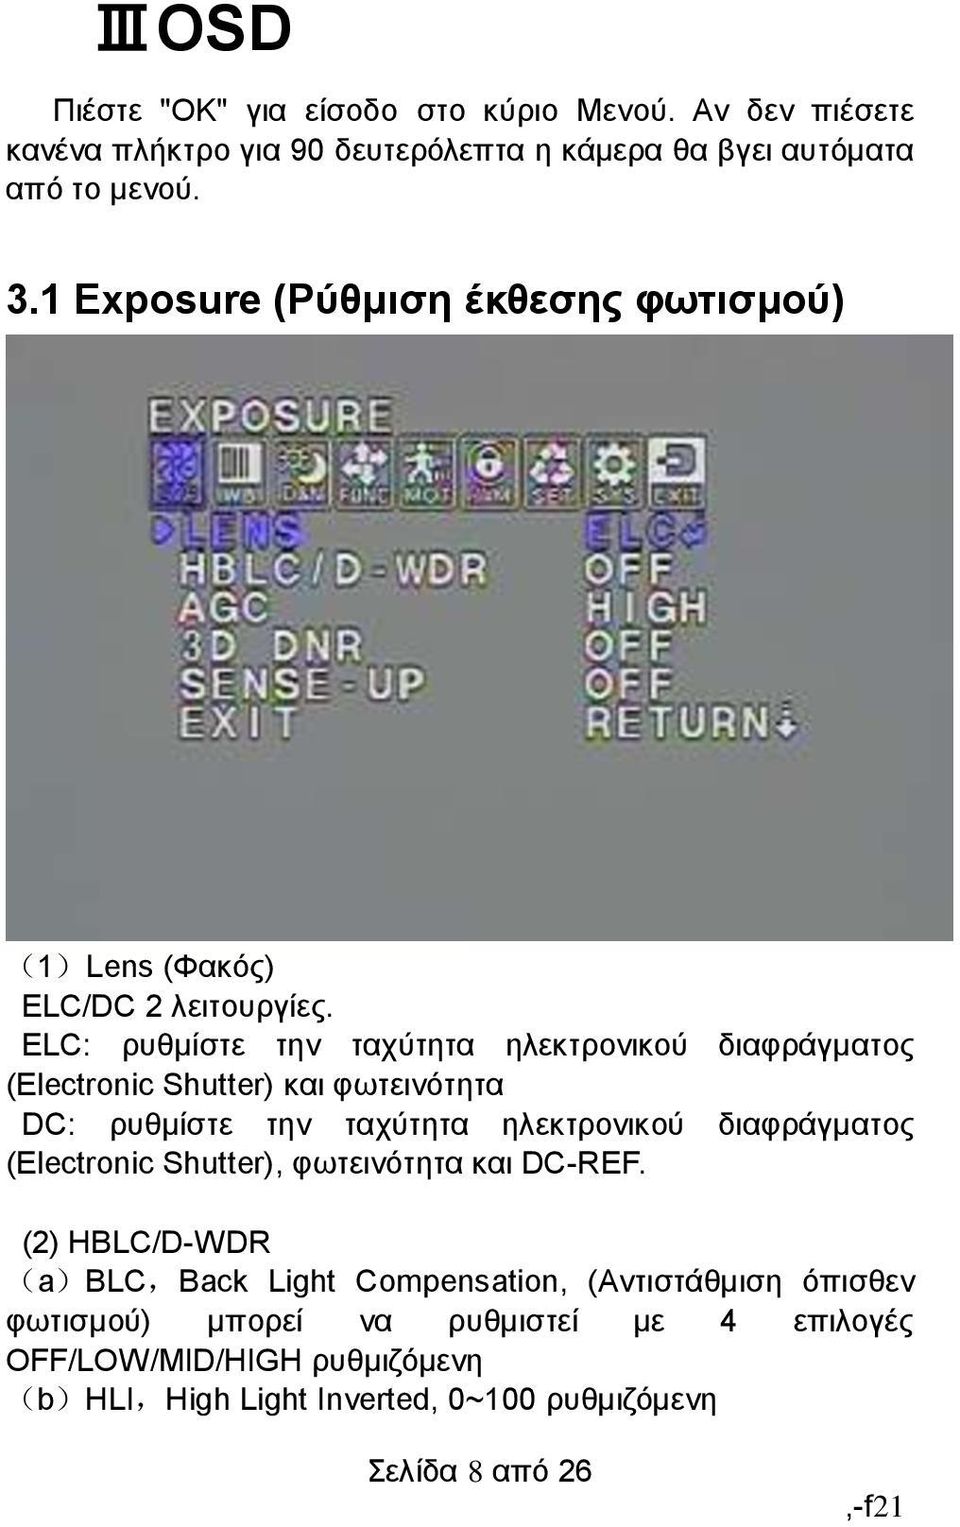 ELC: ρυθμίστε την ταχύτητα ηλεκτρονικού διαφράγματος (Electronic Shutter) και φωτεινότητα DC: ρυθμίστε την ταχύτητα ηλεκτρονικού διαφράγματος